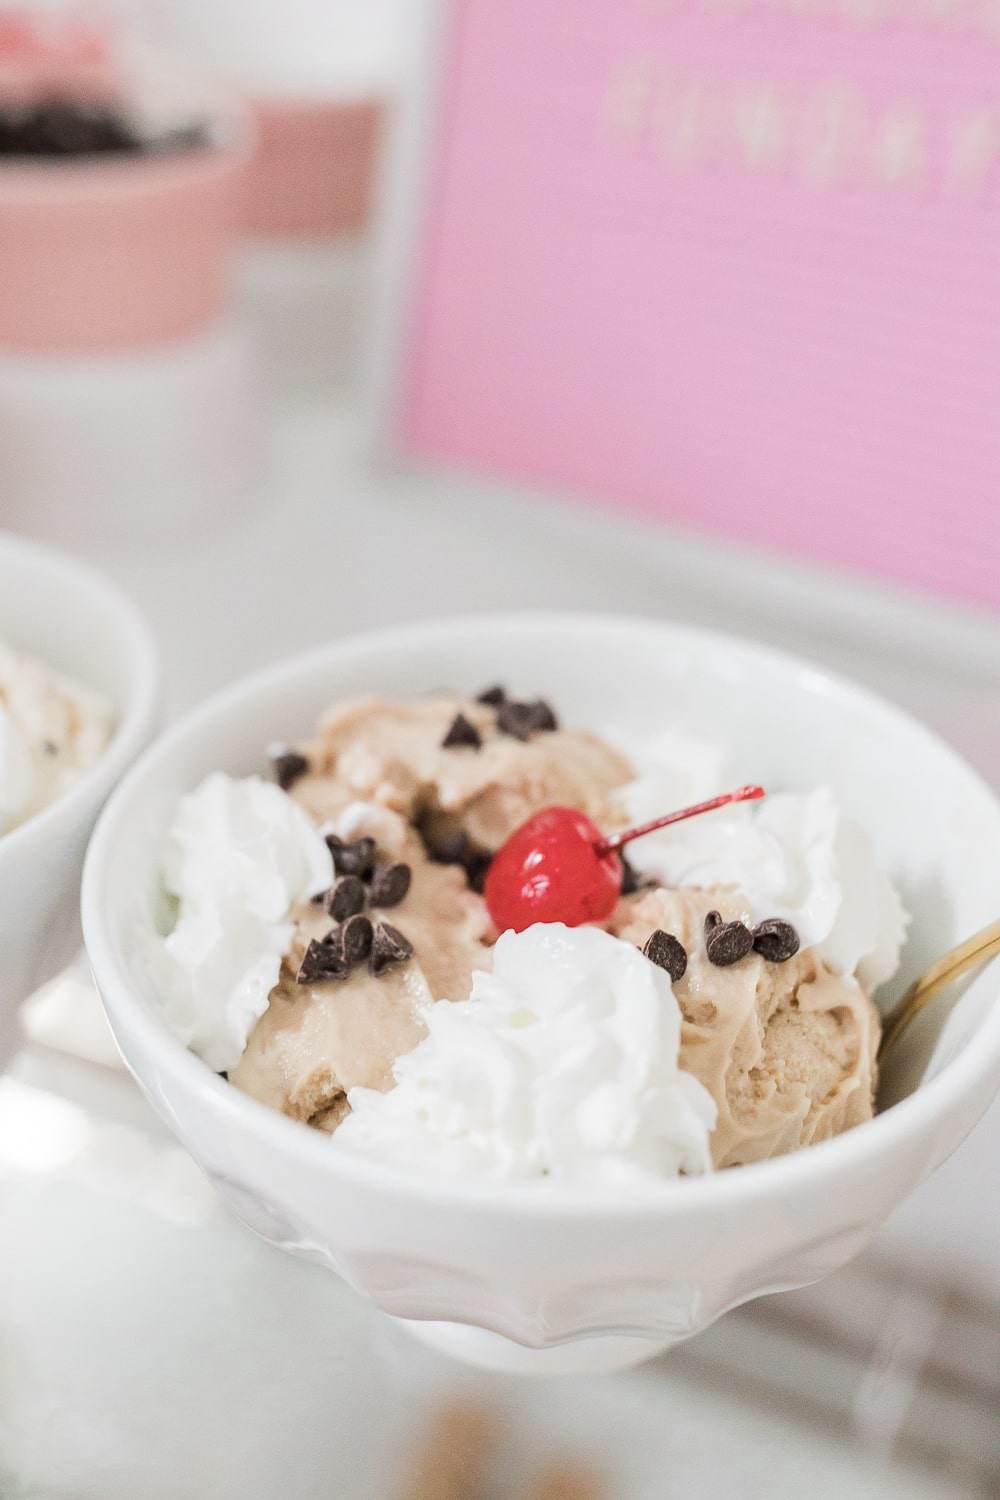 Halo Top ice cream sundae on Diary of a Debutante